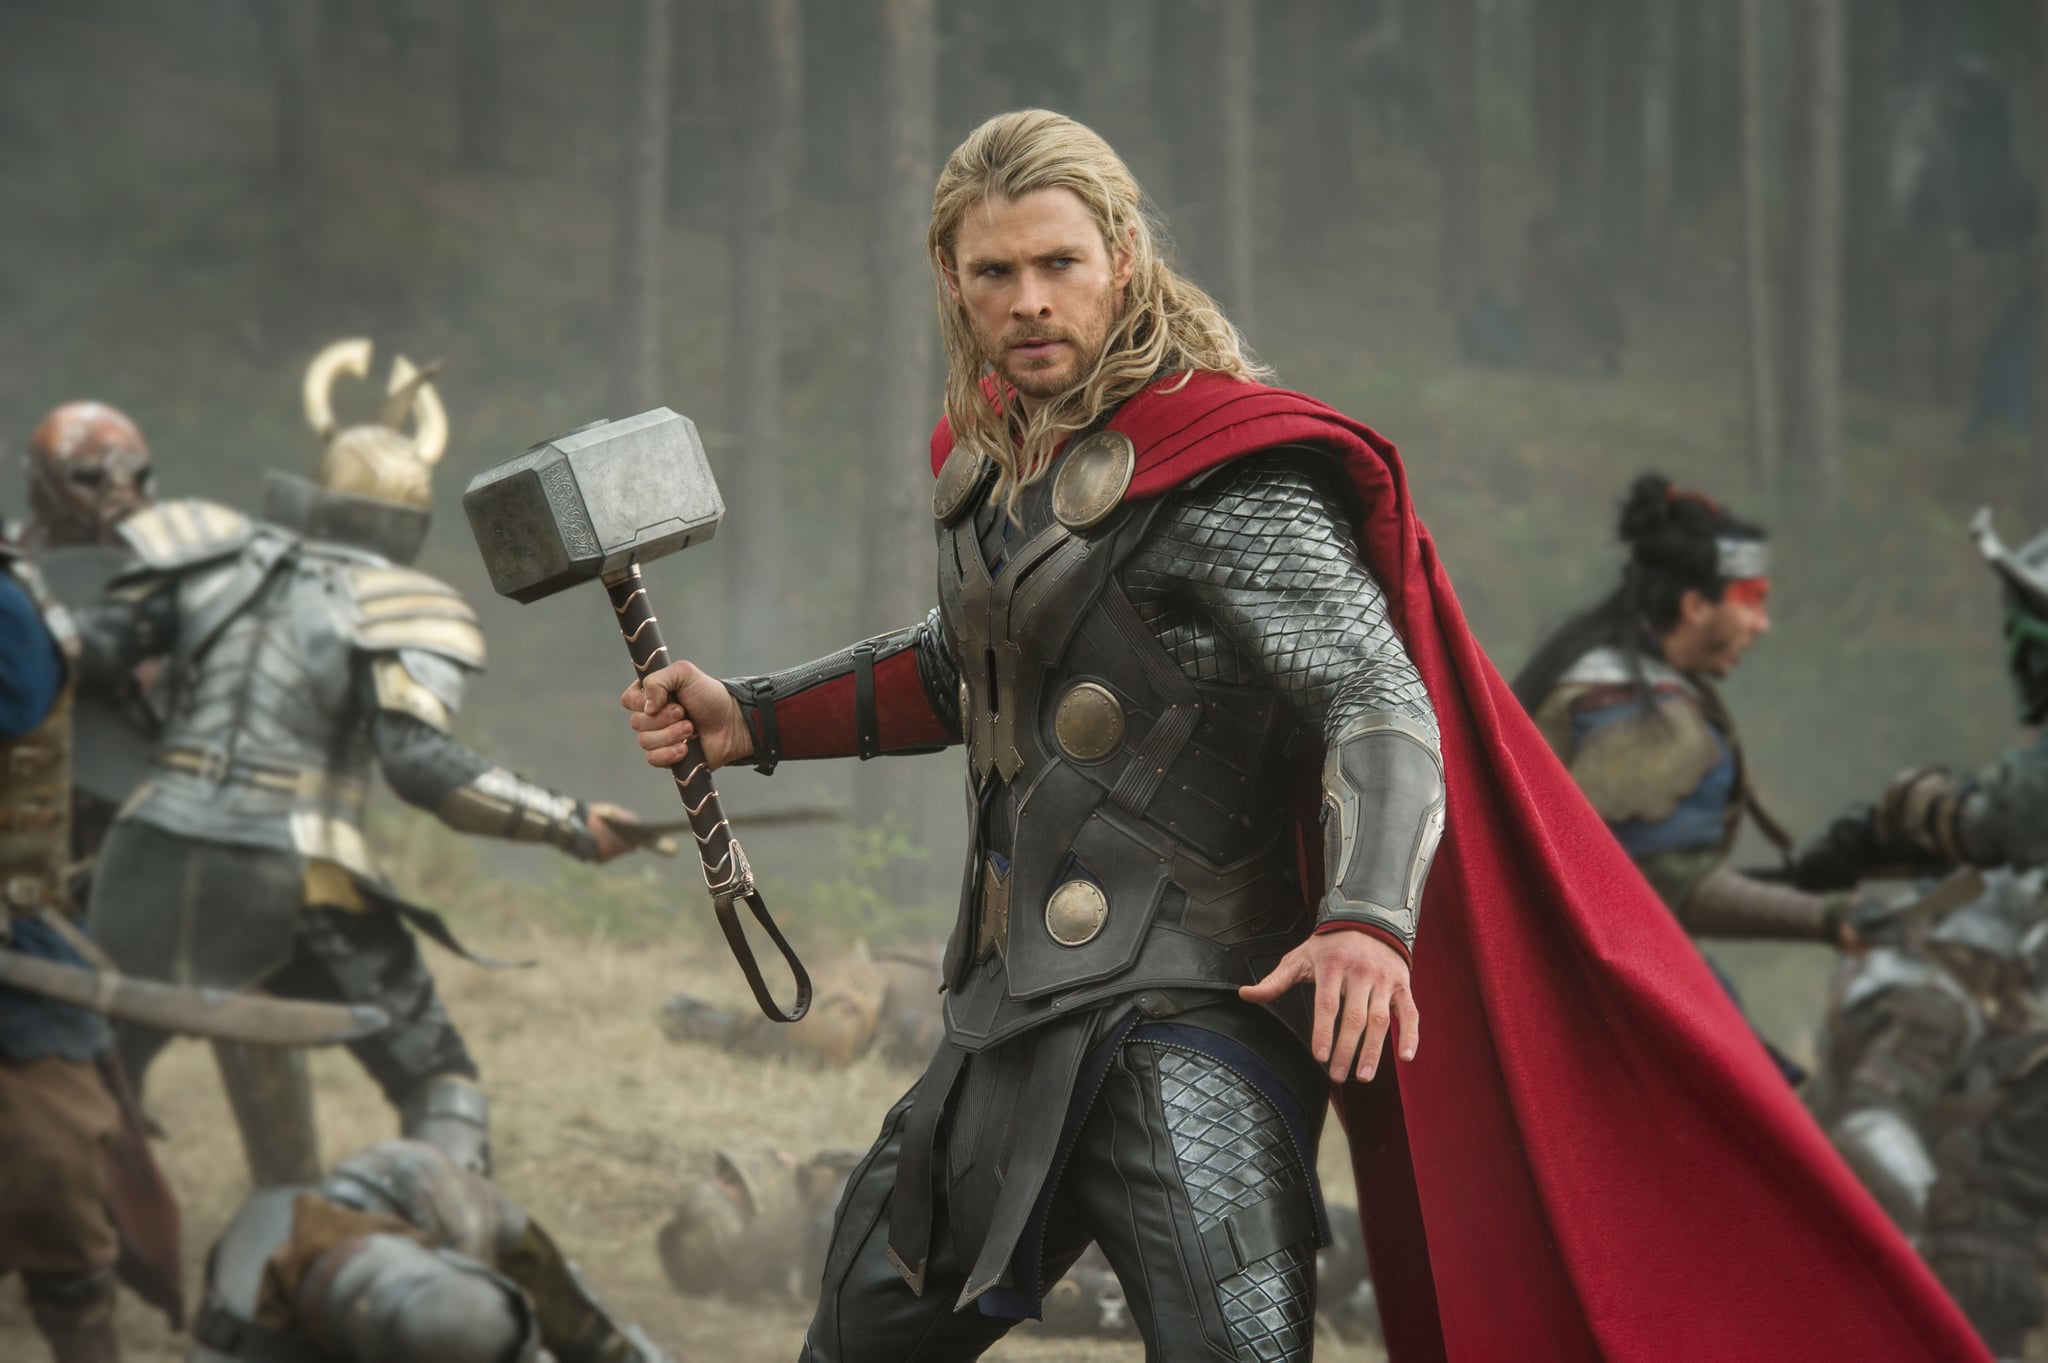 THOR: THE DARK WORLD, Chris Hemsworth as Thor, 2013. ph: Jay Maidment/Walt Disney Studios/courtesy Everett Collection